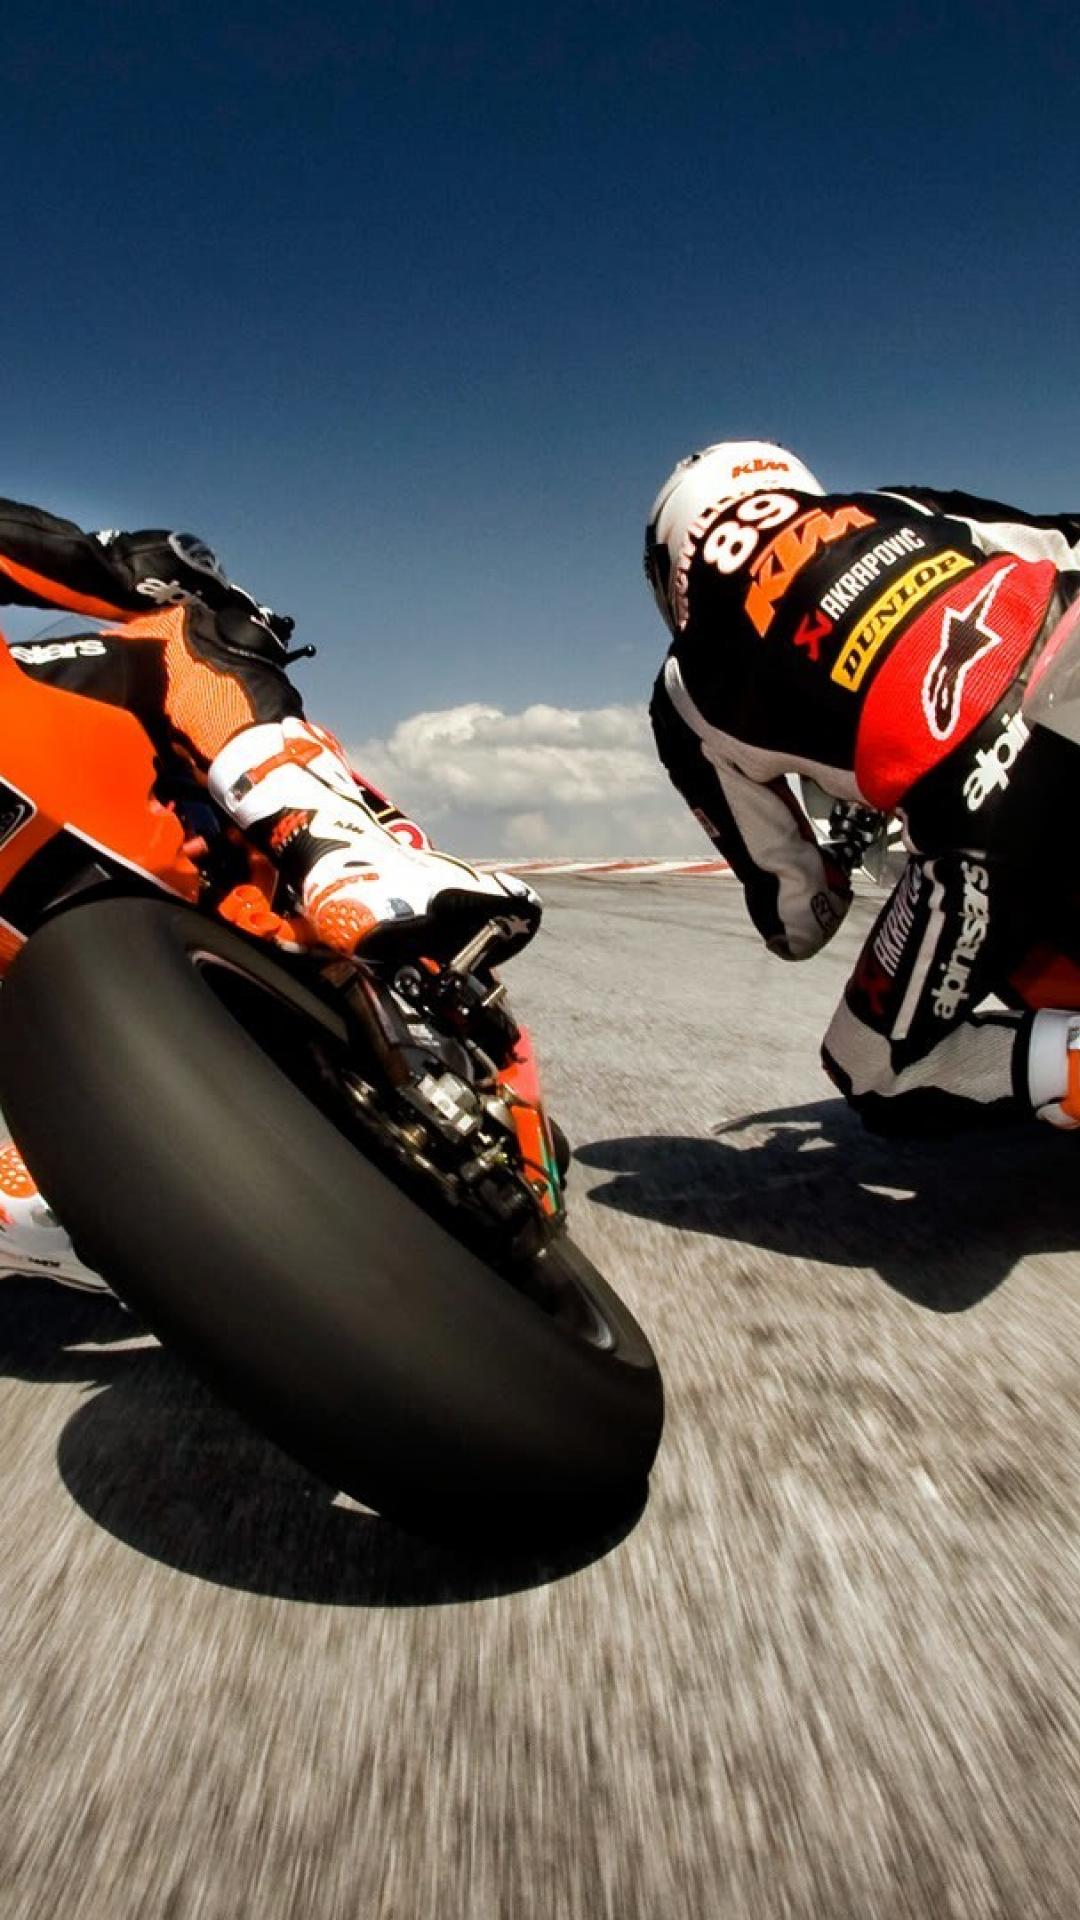 moto mobile wallpaper,grand prix motorcycle racing,motorcycle racer,superbike racing,motorcycle racing,motorsport